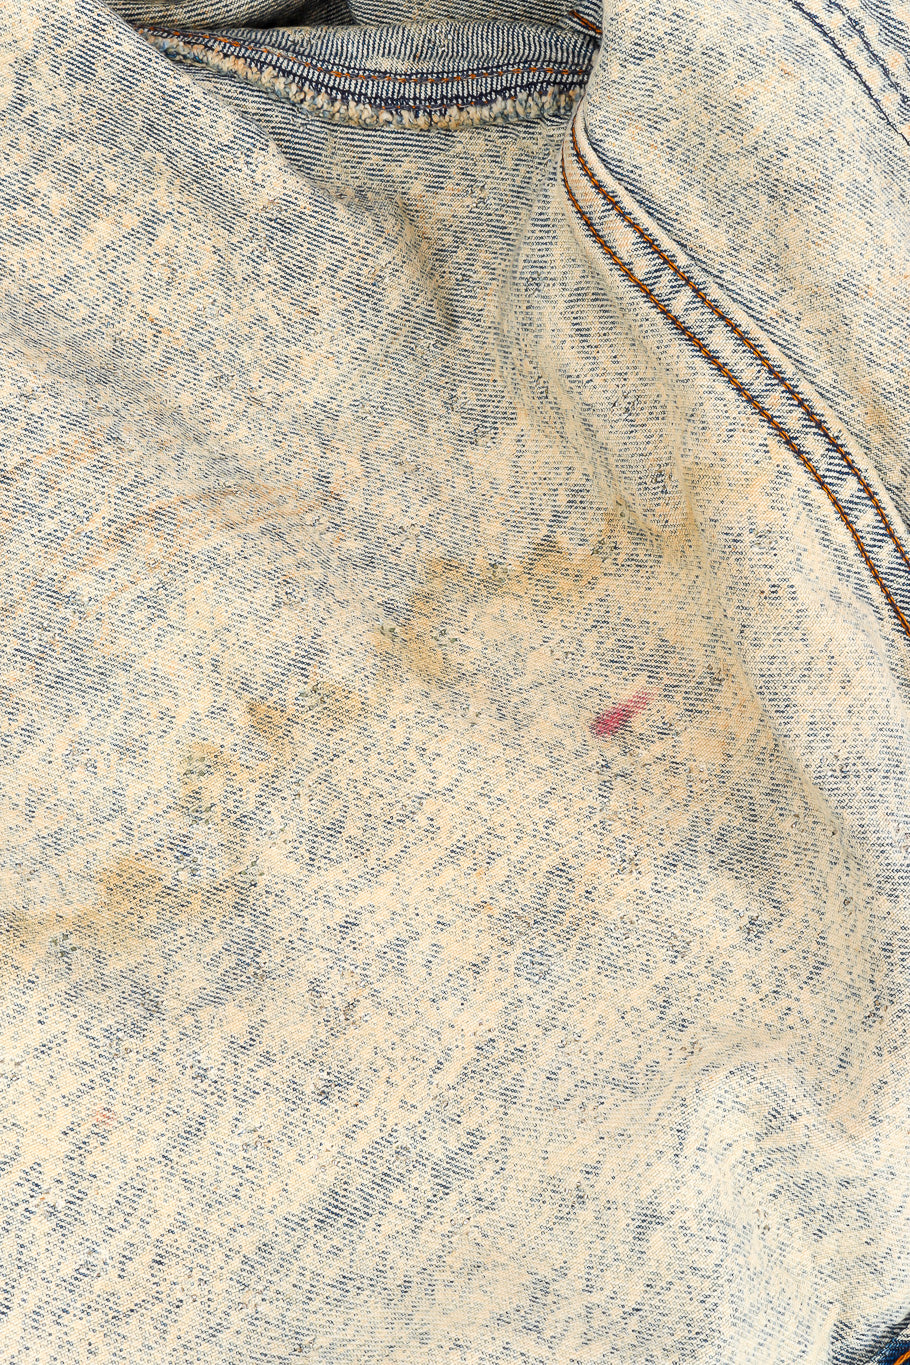 Vintage Tony Alamo The Big Apple Denim Jacket view of stain closeup @Recessla